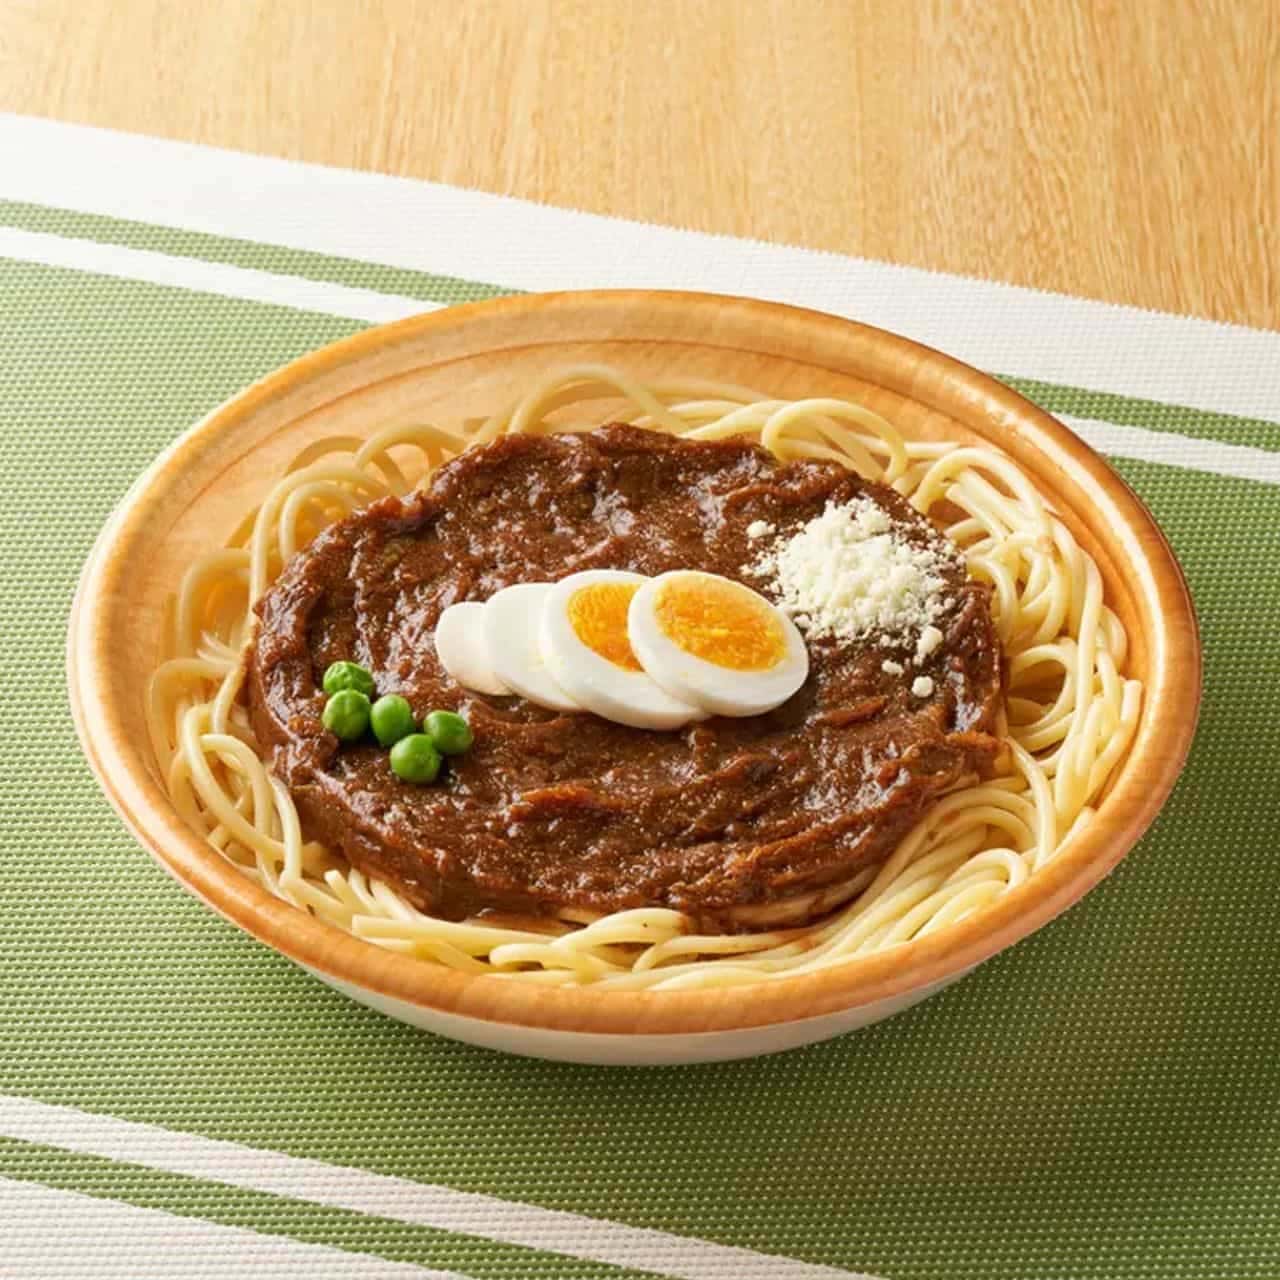 FamilyMart "Large Curry Spaghetti